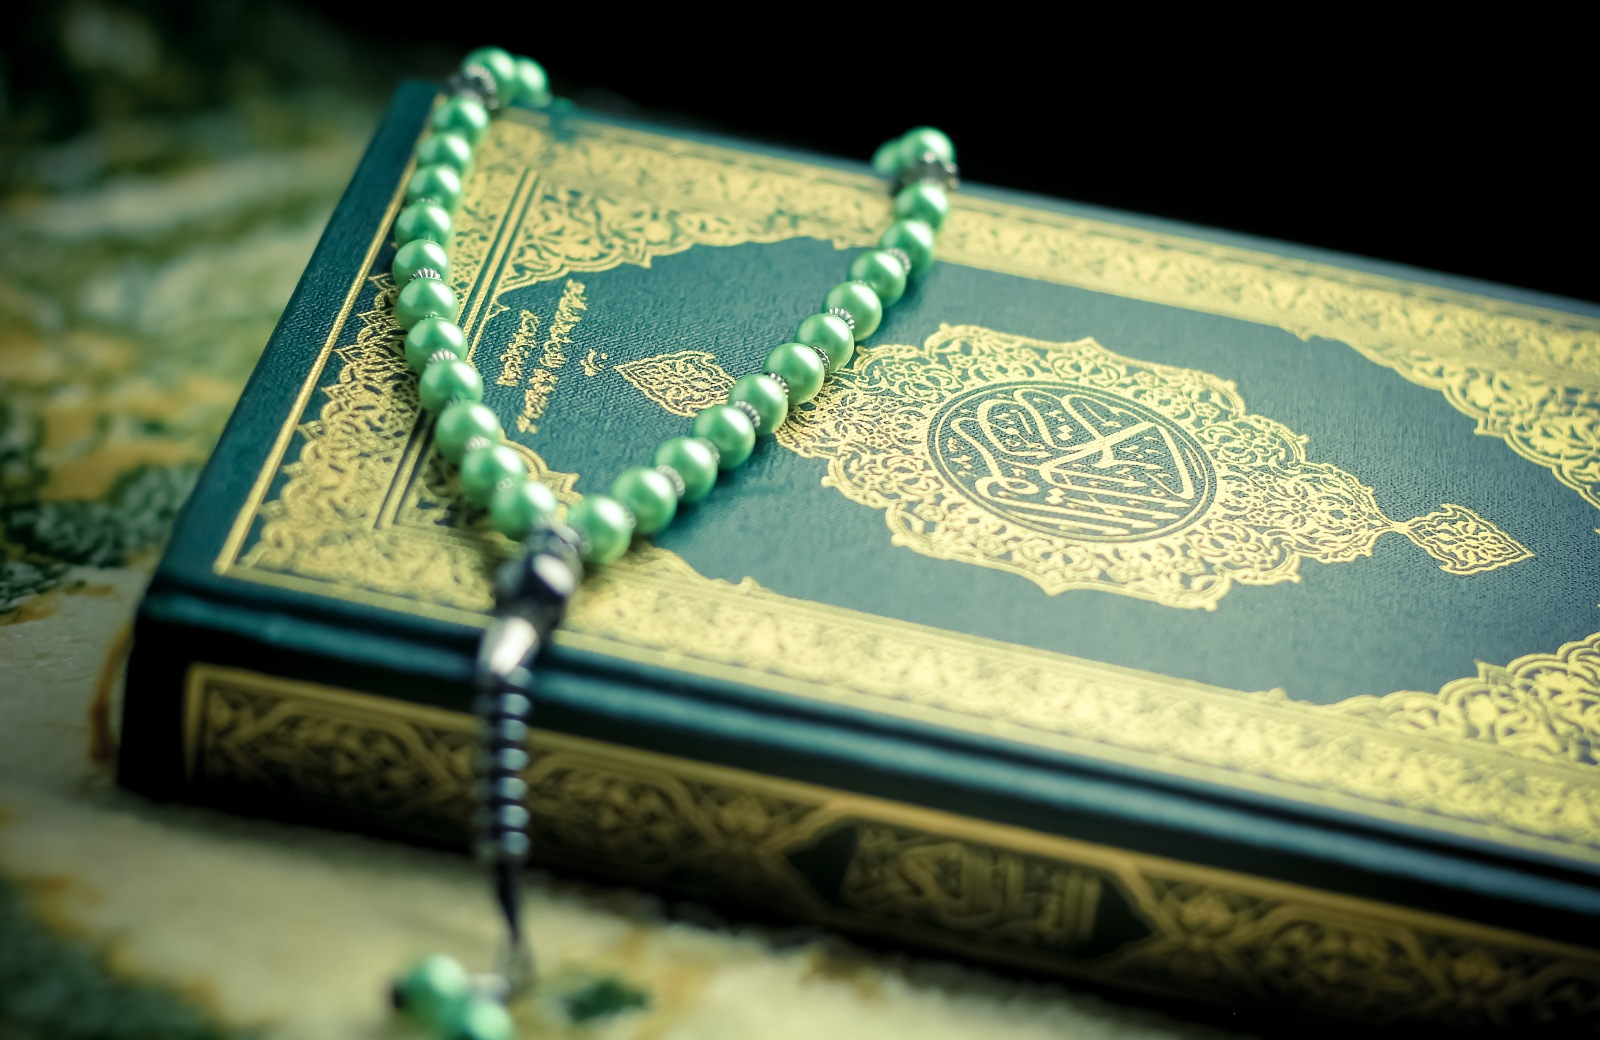 Quron kitob. Коран зеленый мусхаф. Коран и четки. Мусульманские атрибуты. Мусульманские четки и Коран.